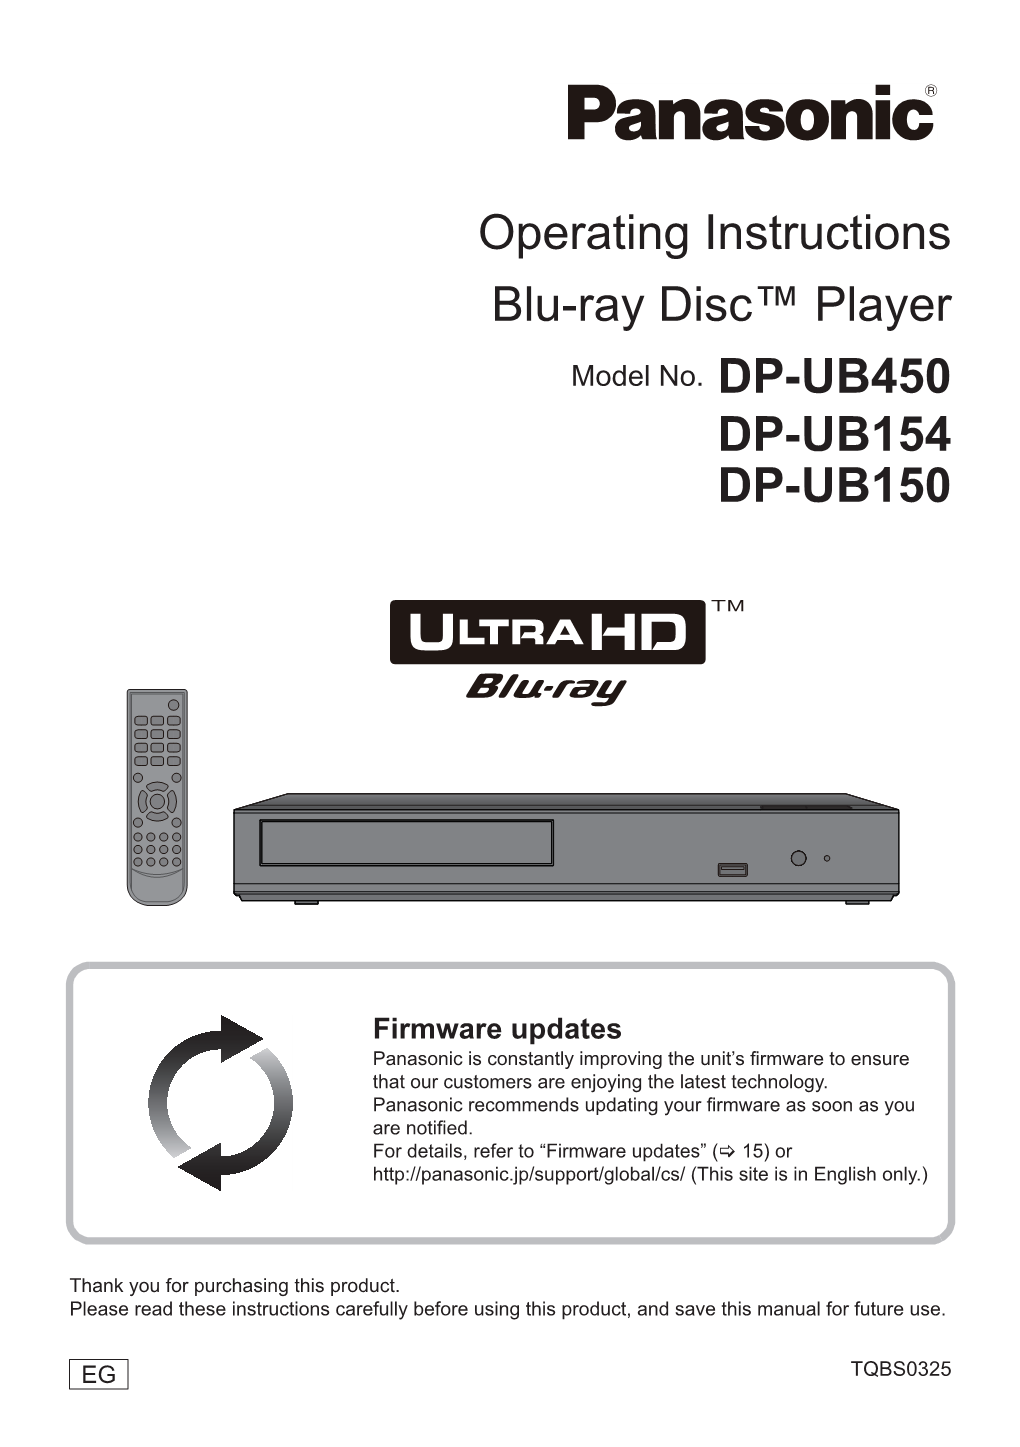 Operating Instructions Blu-Ray Disc™ Player DP-UB154 DP-UB150